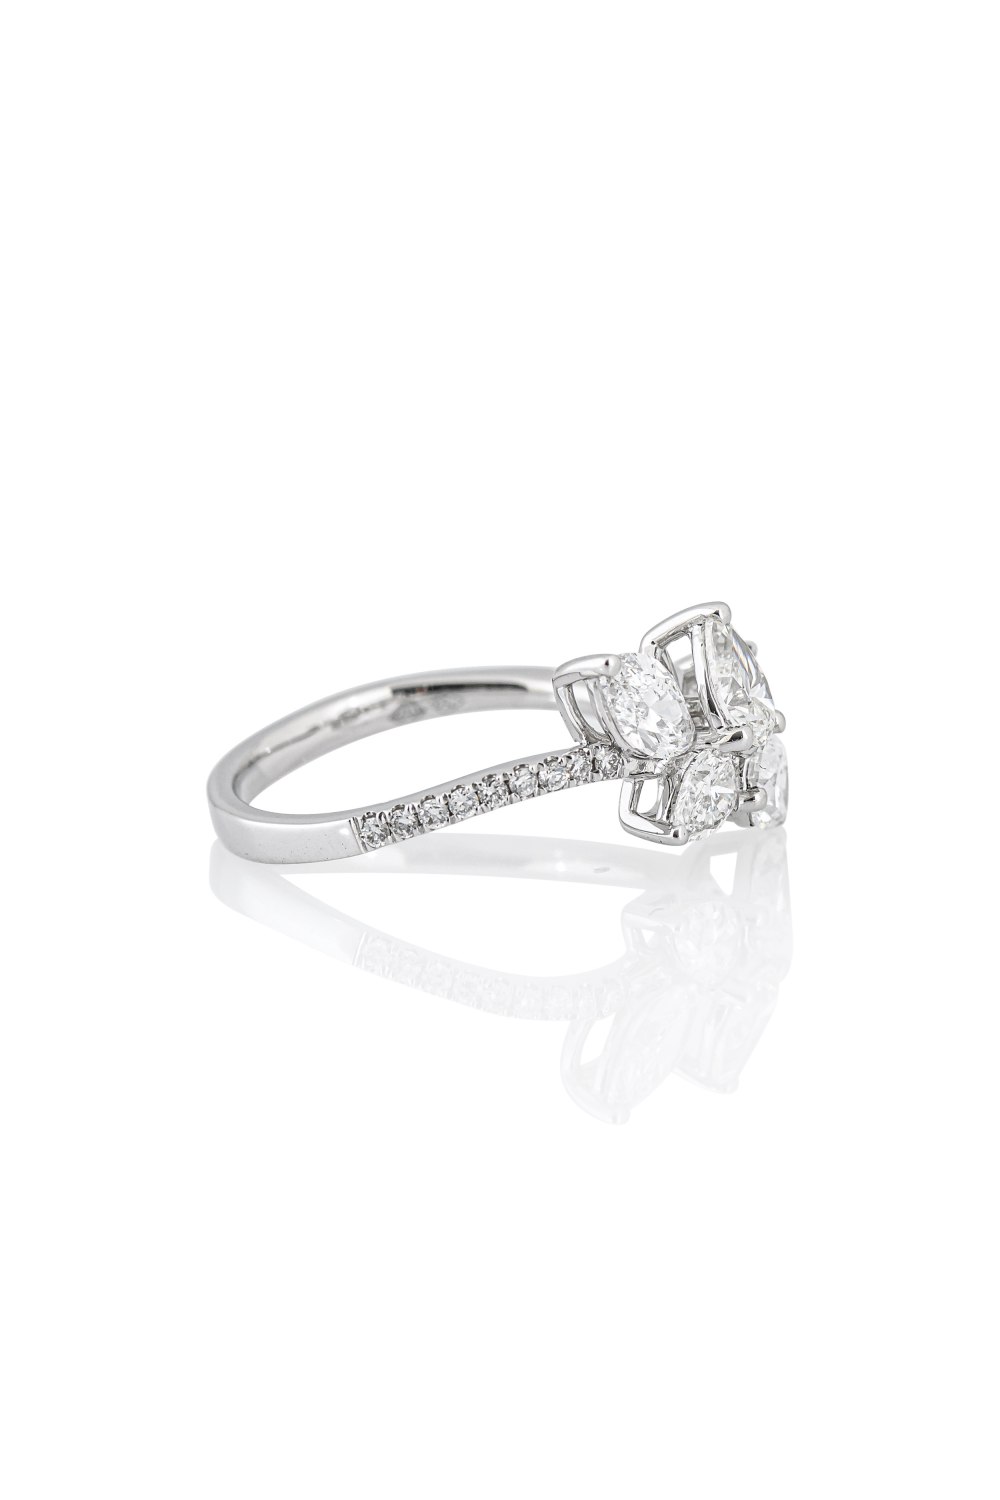 KESSARIS - Flower Diamond Ring